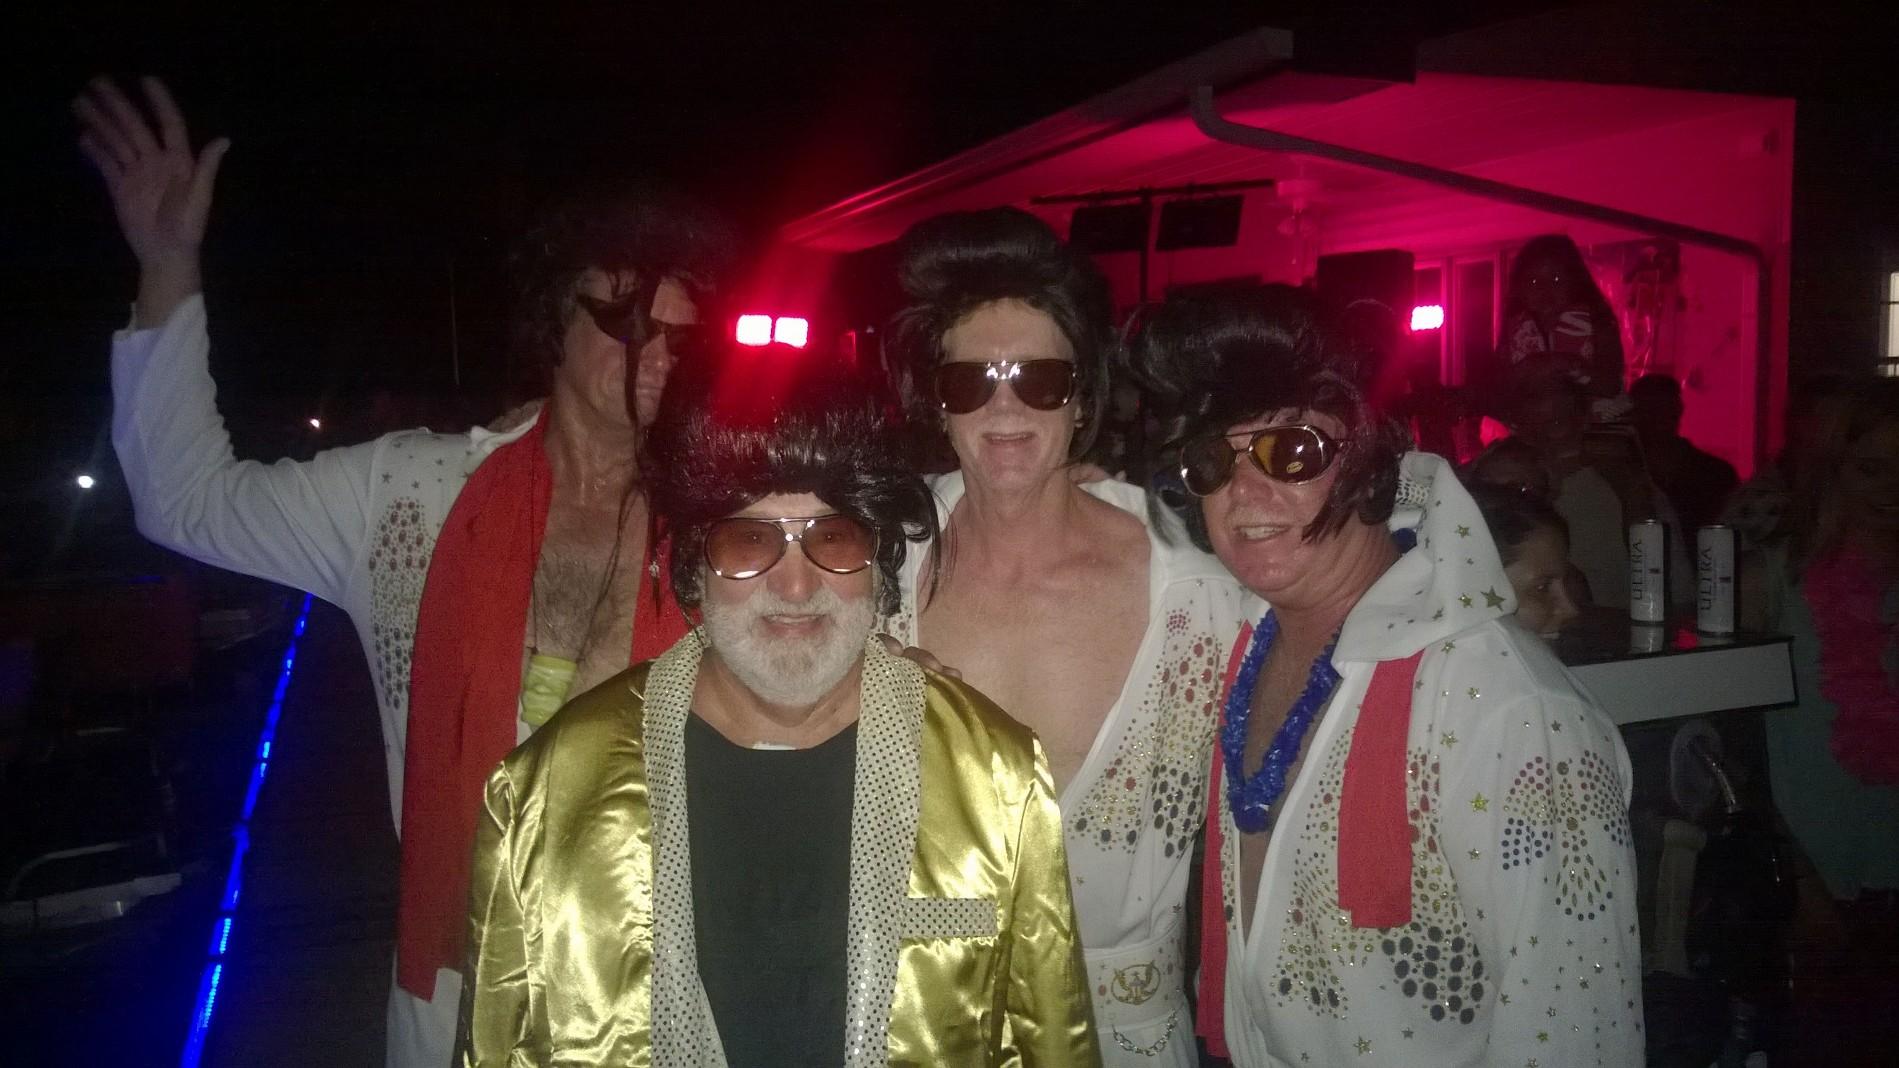 Group in Elvis Costumes